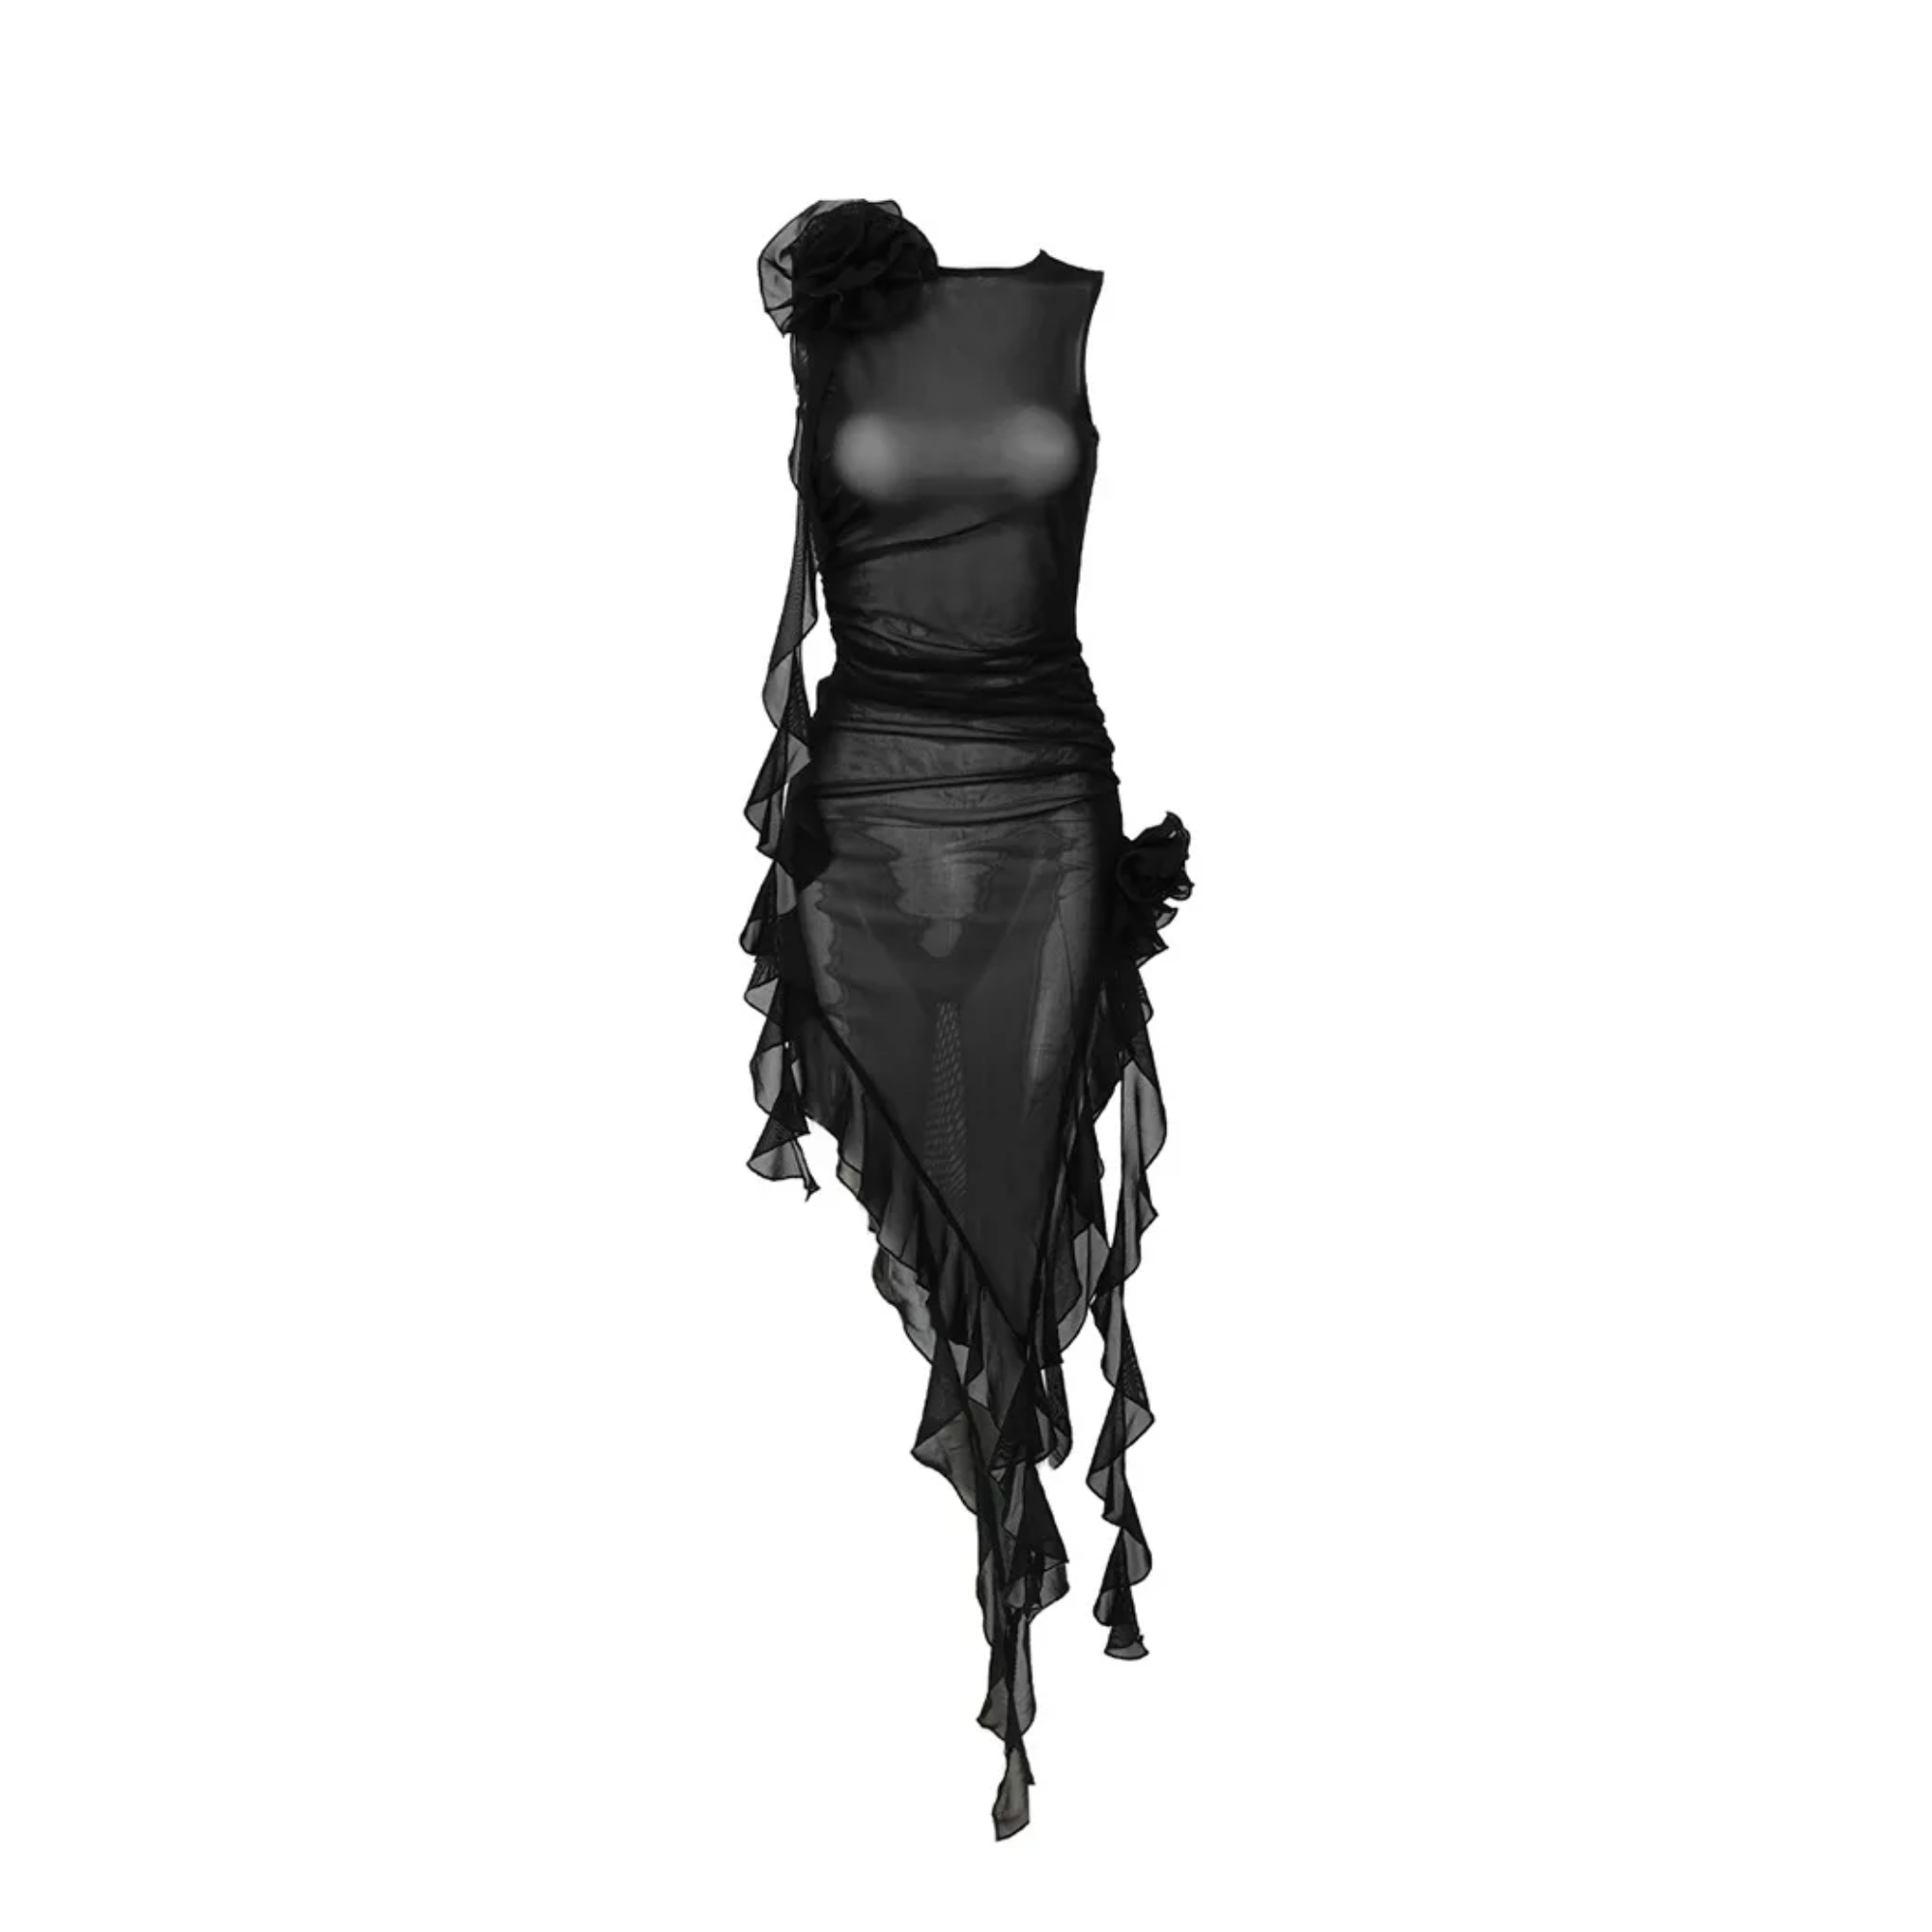 3D Floral Sheer Midi Dress - Pre Order: Ships Feb 29